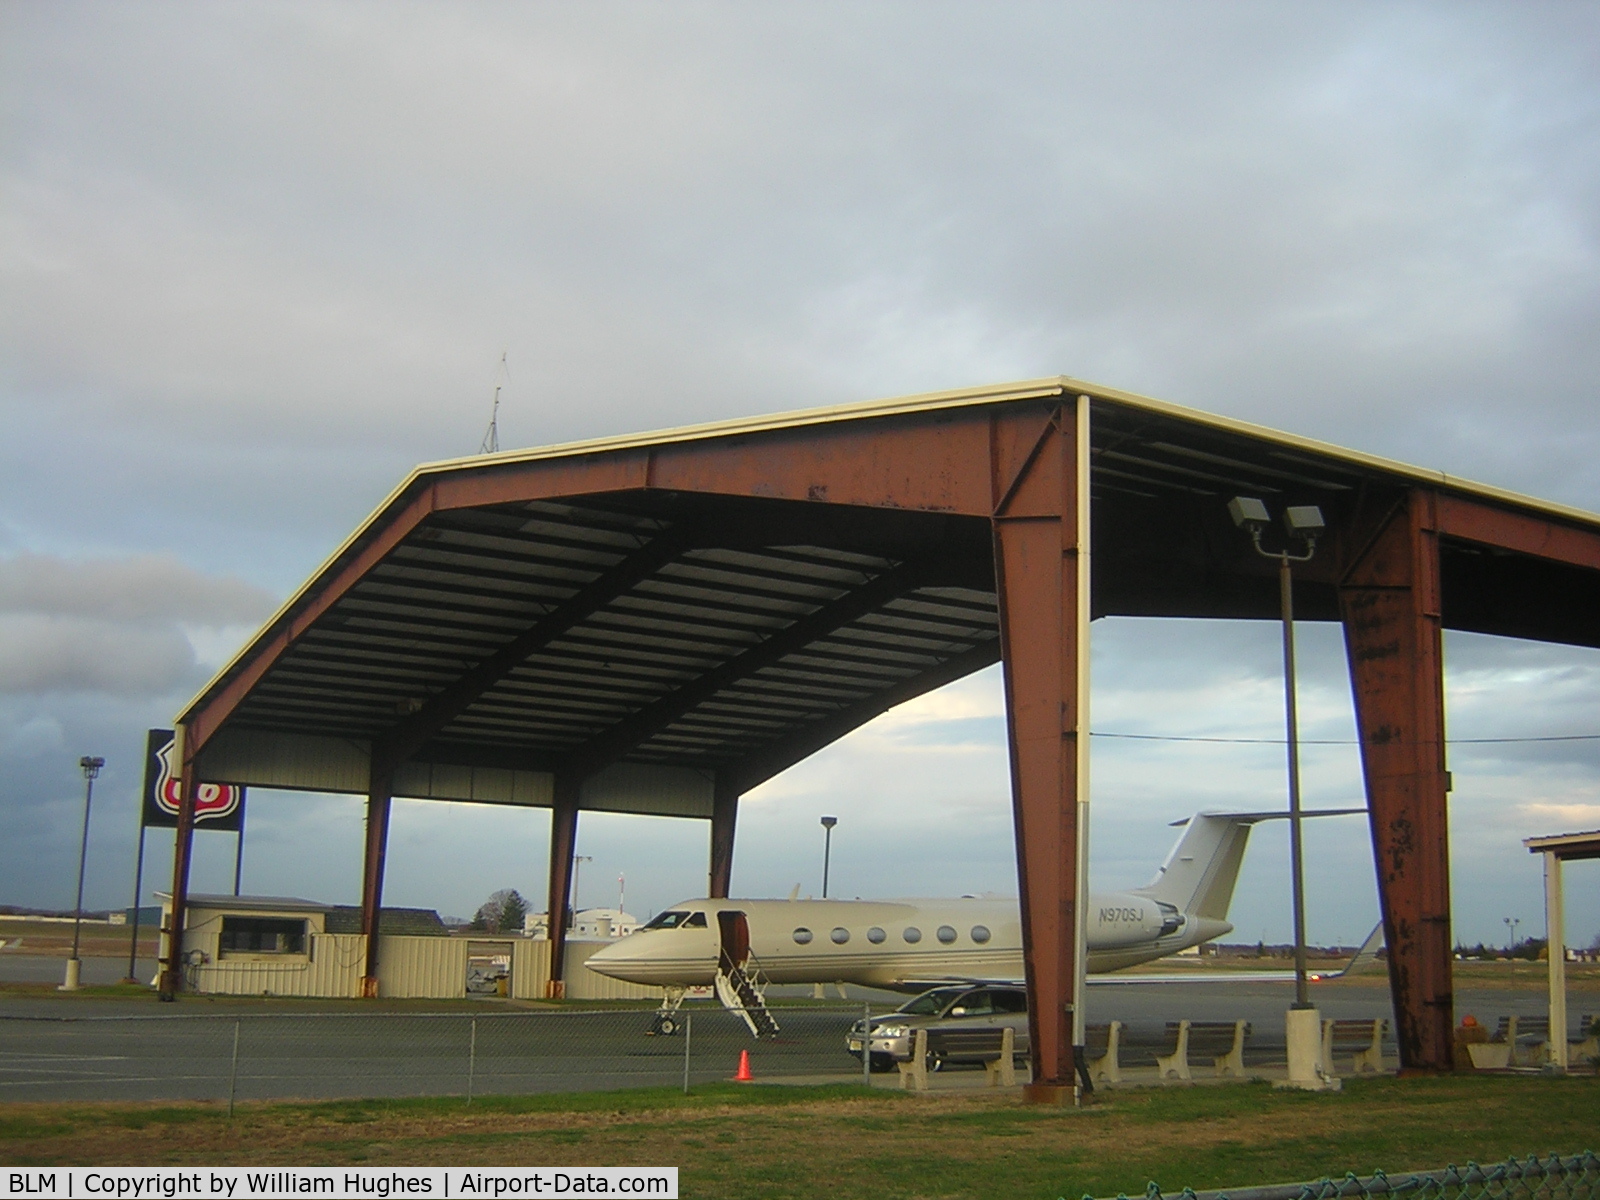 Monmouth Executive Airport (BLM) - the terminal